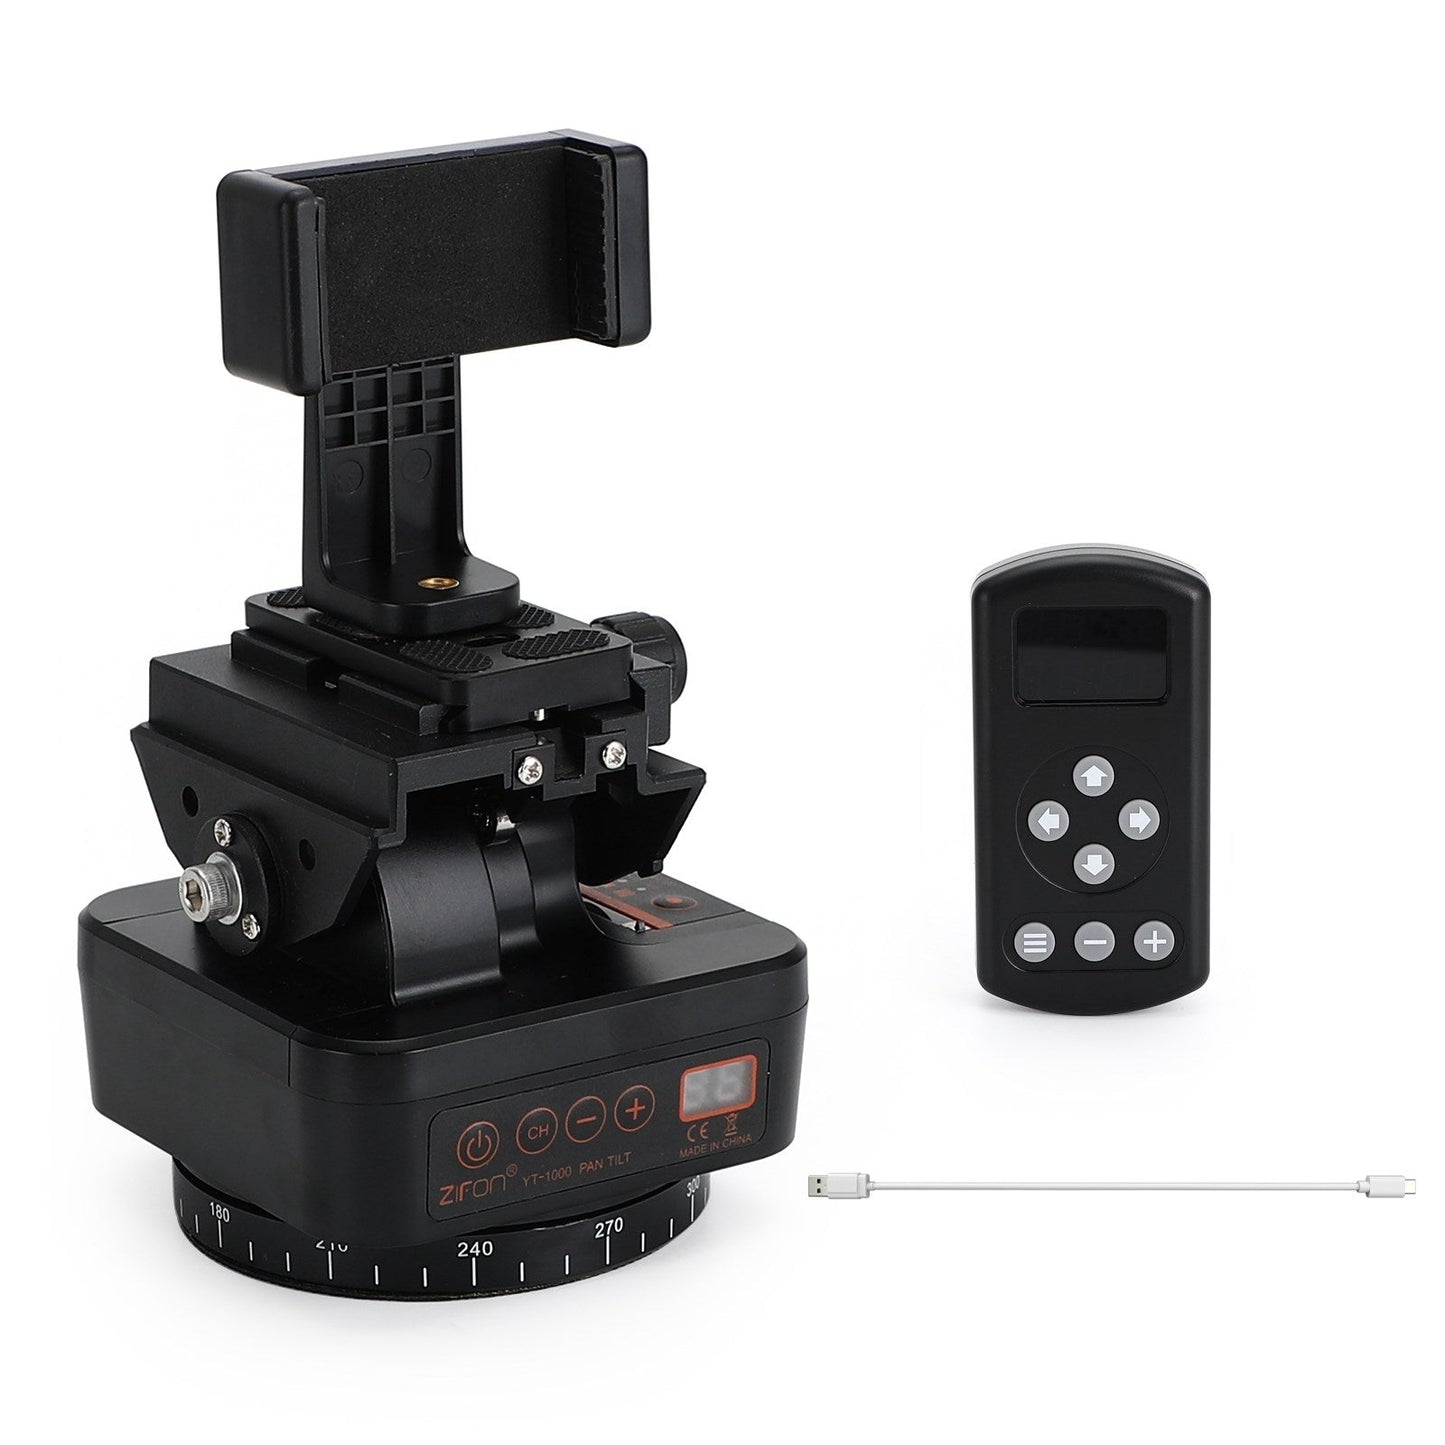 Zifon YT-1000 Remote 360 ° Panorama rotierender Stativkopf für GoPro DSLR-Telefon